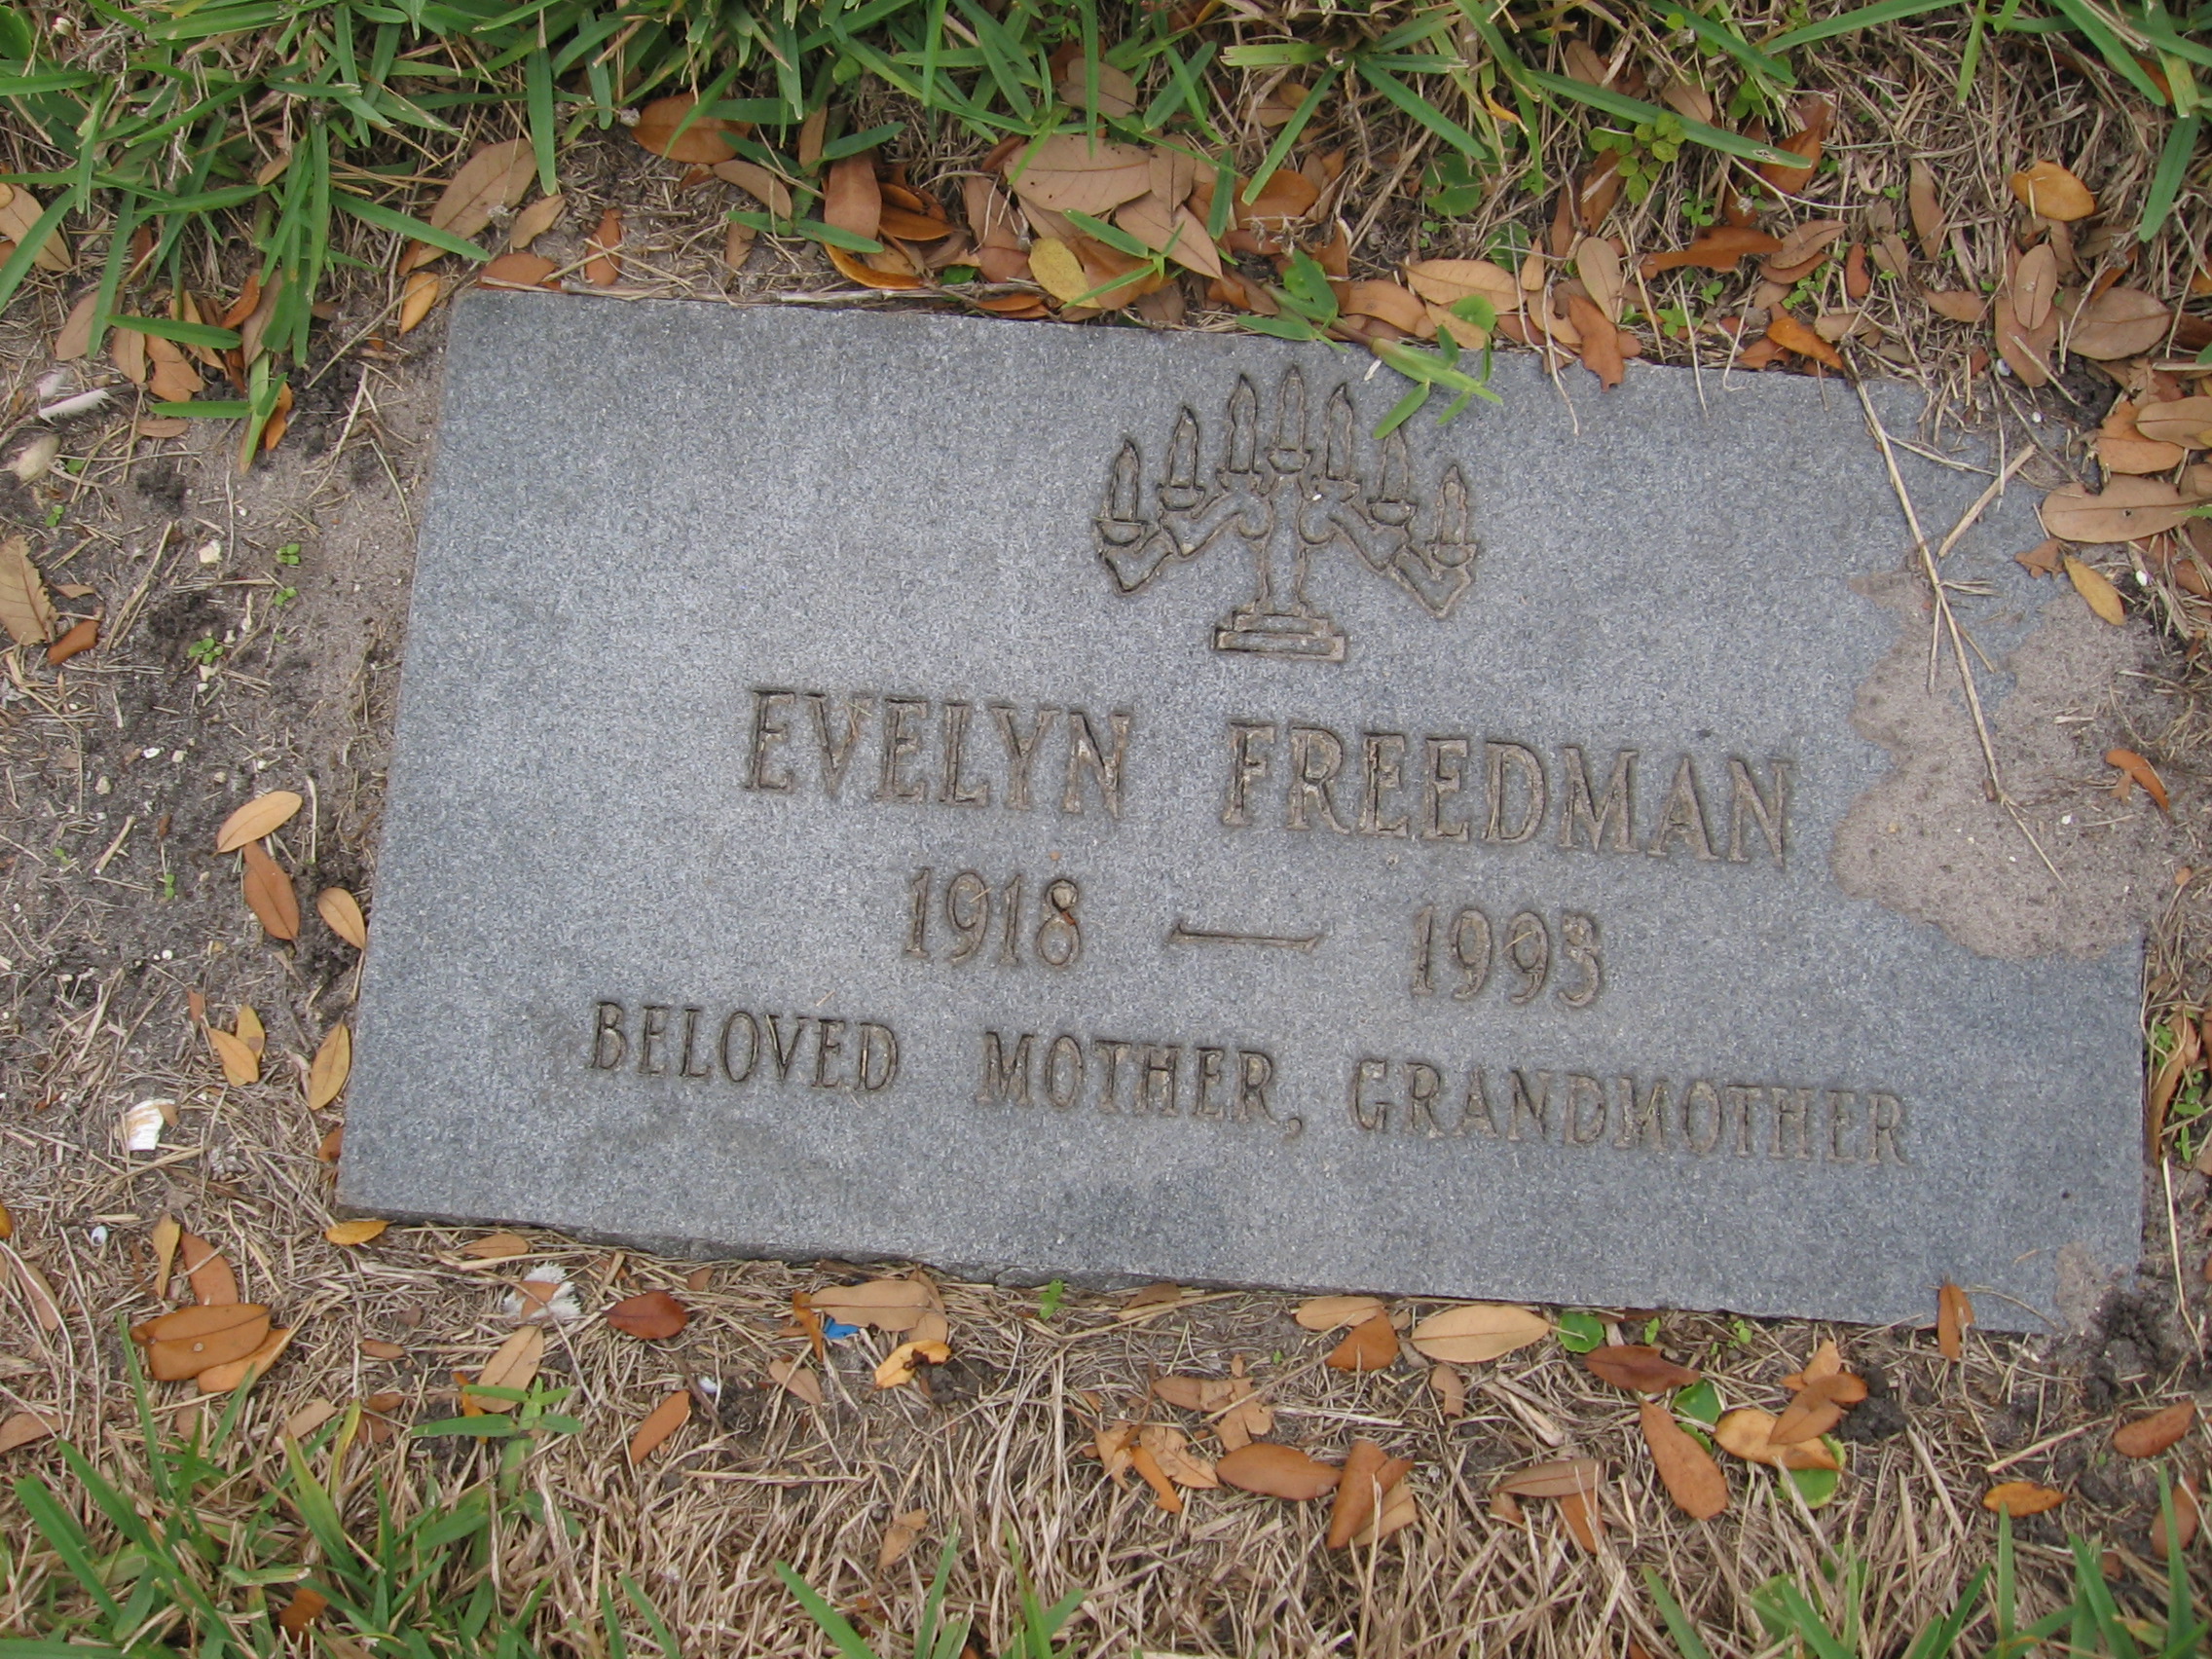 Evelyn Freedman